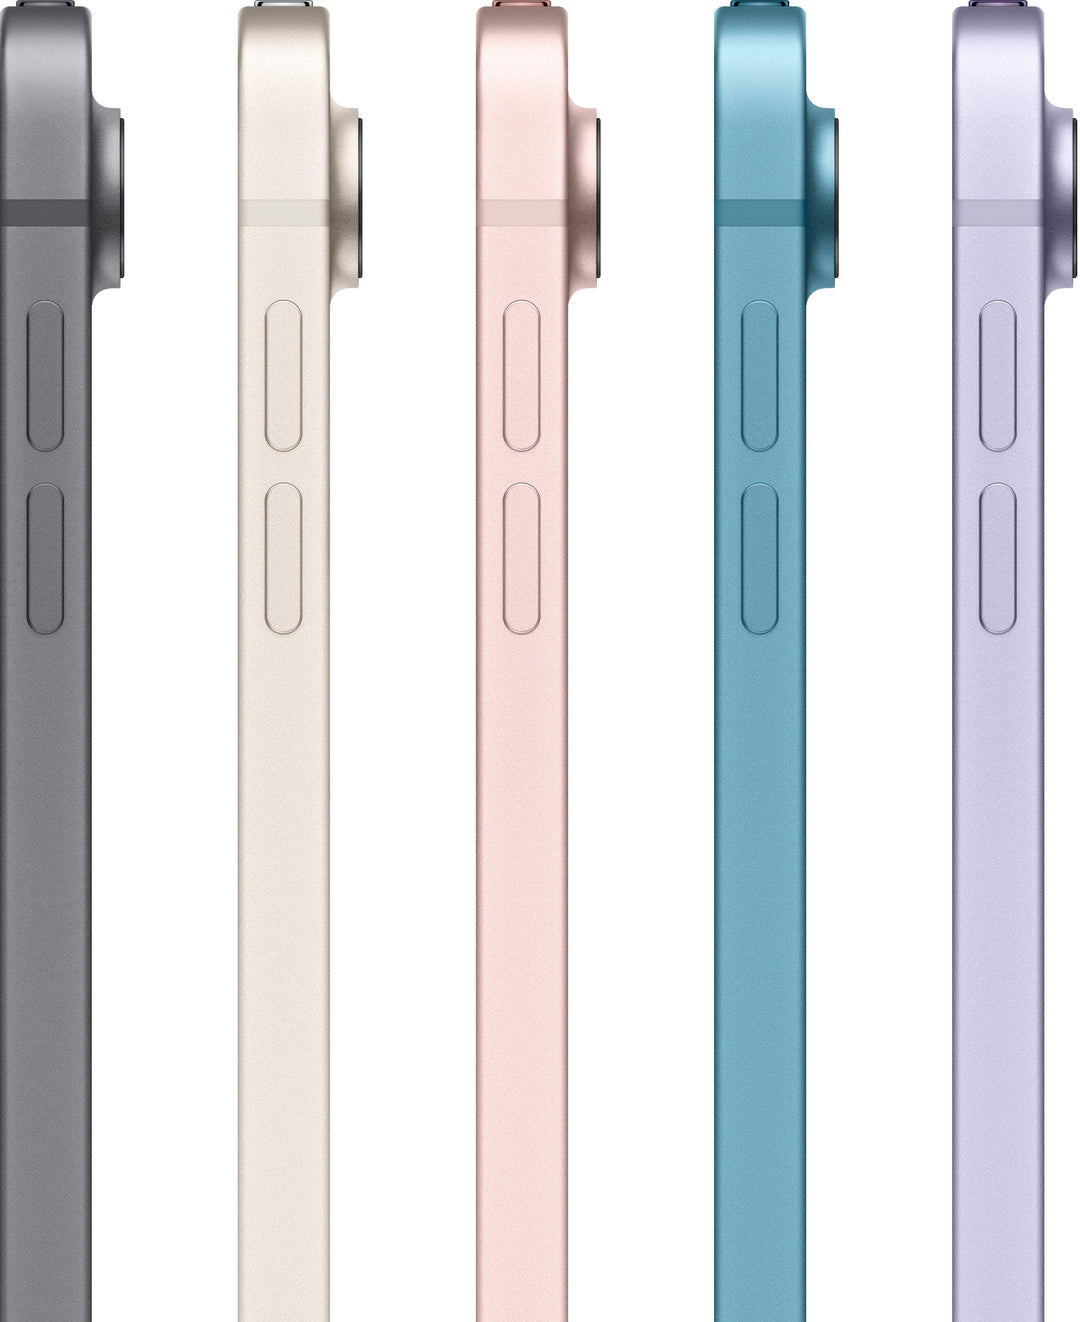 Apple - 10.9-Inch iPad Air - Latest Model - (5th Generation) with Wi-Fi + Cellular - 64GB - Blue (Unlocked)_6